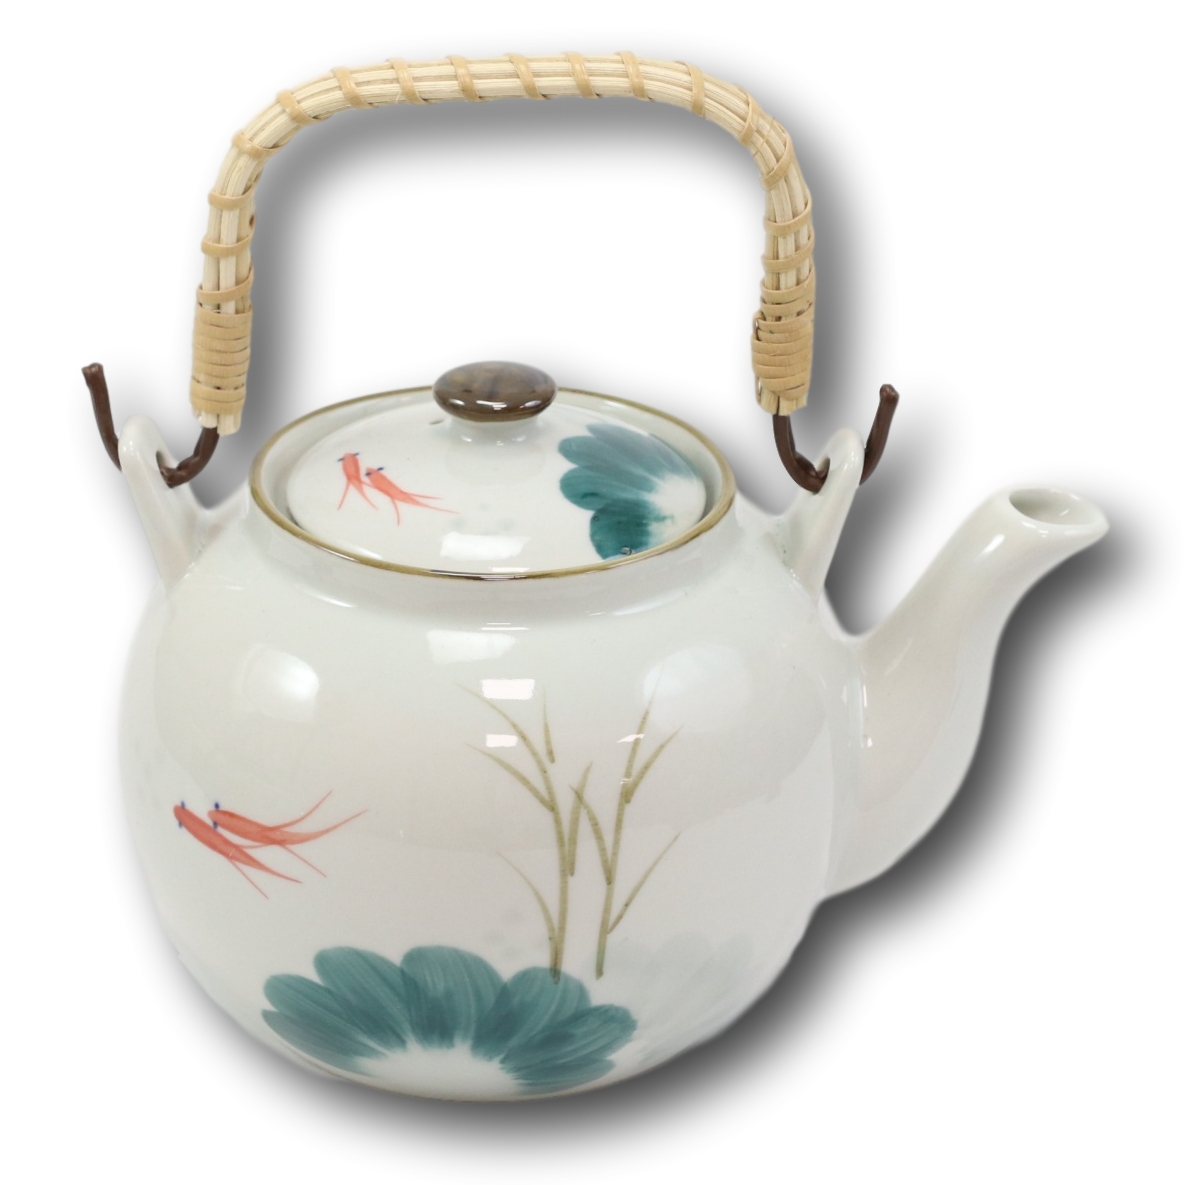 Feng Shui Yin Yang Koi Fish Pair In Lily Pond Ceramic Tea Pot 38oz Teapot Decor - image 2 of 4